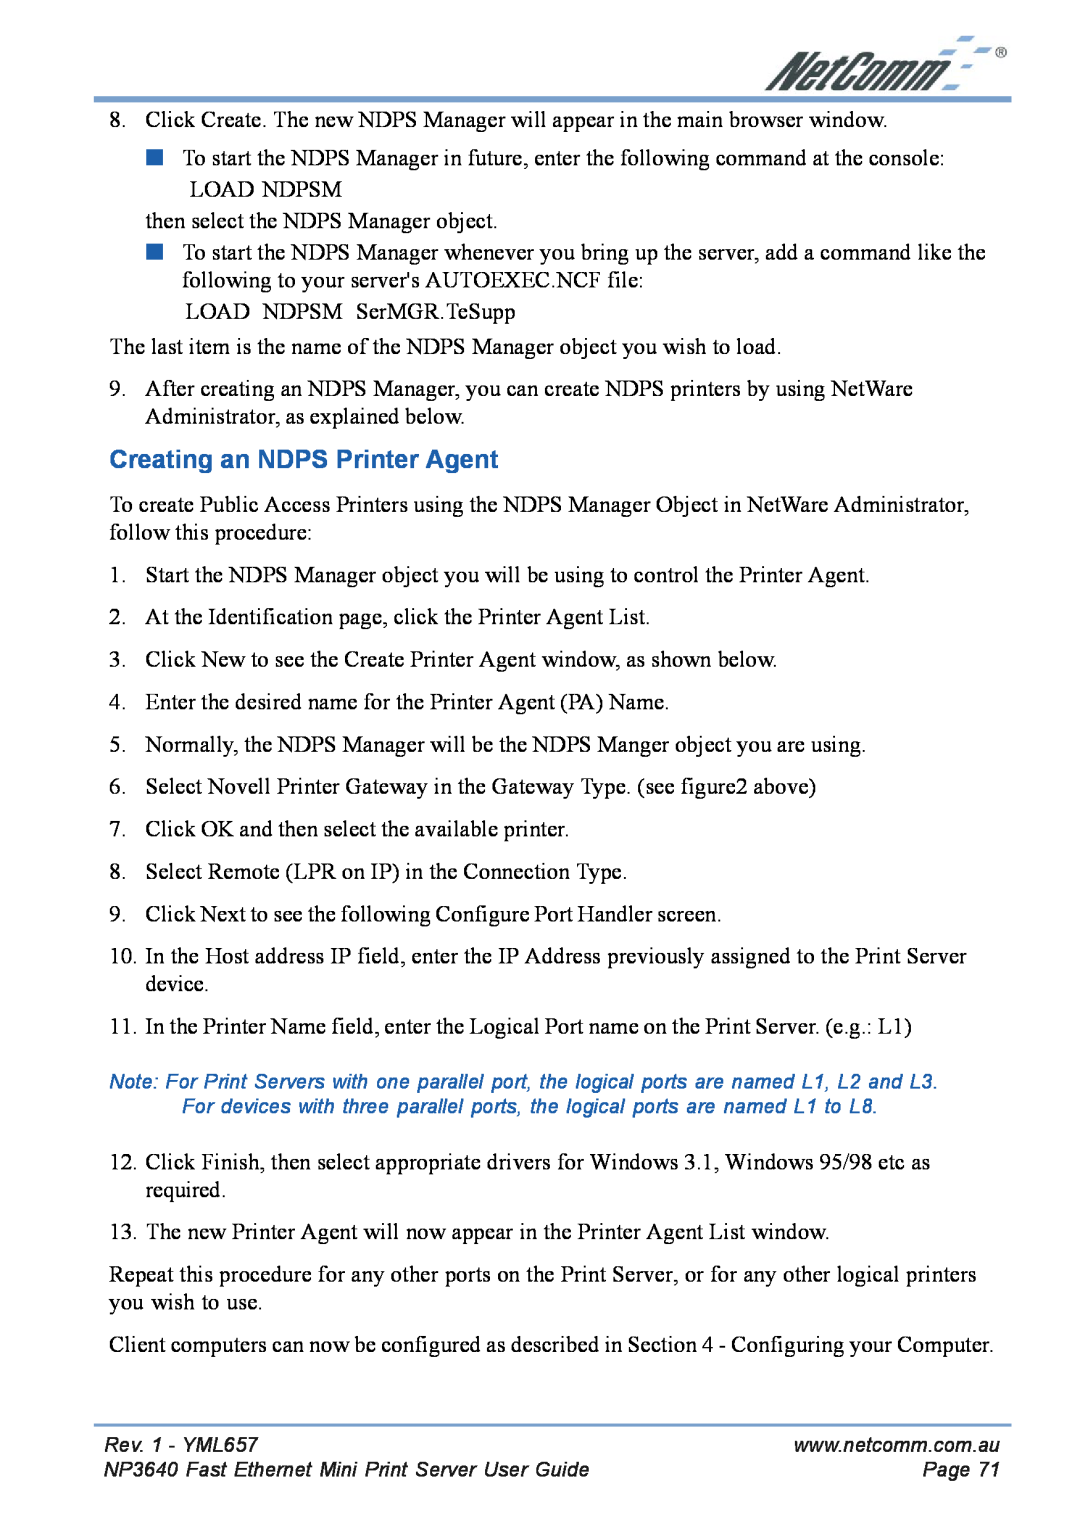 NetComm NP3640 manual Creating an NDPS Printer Agent 